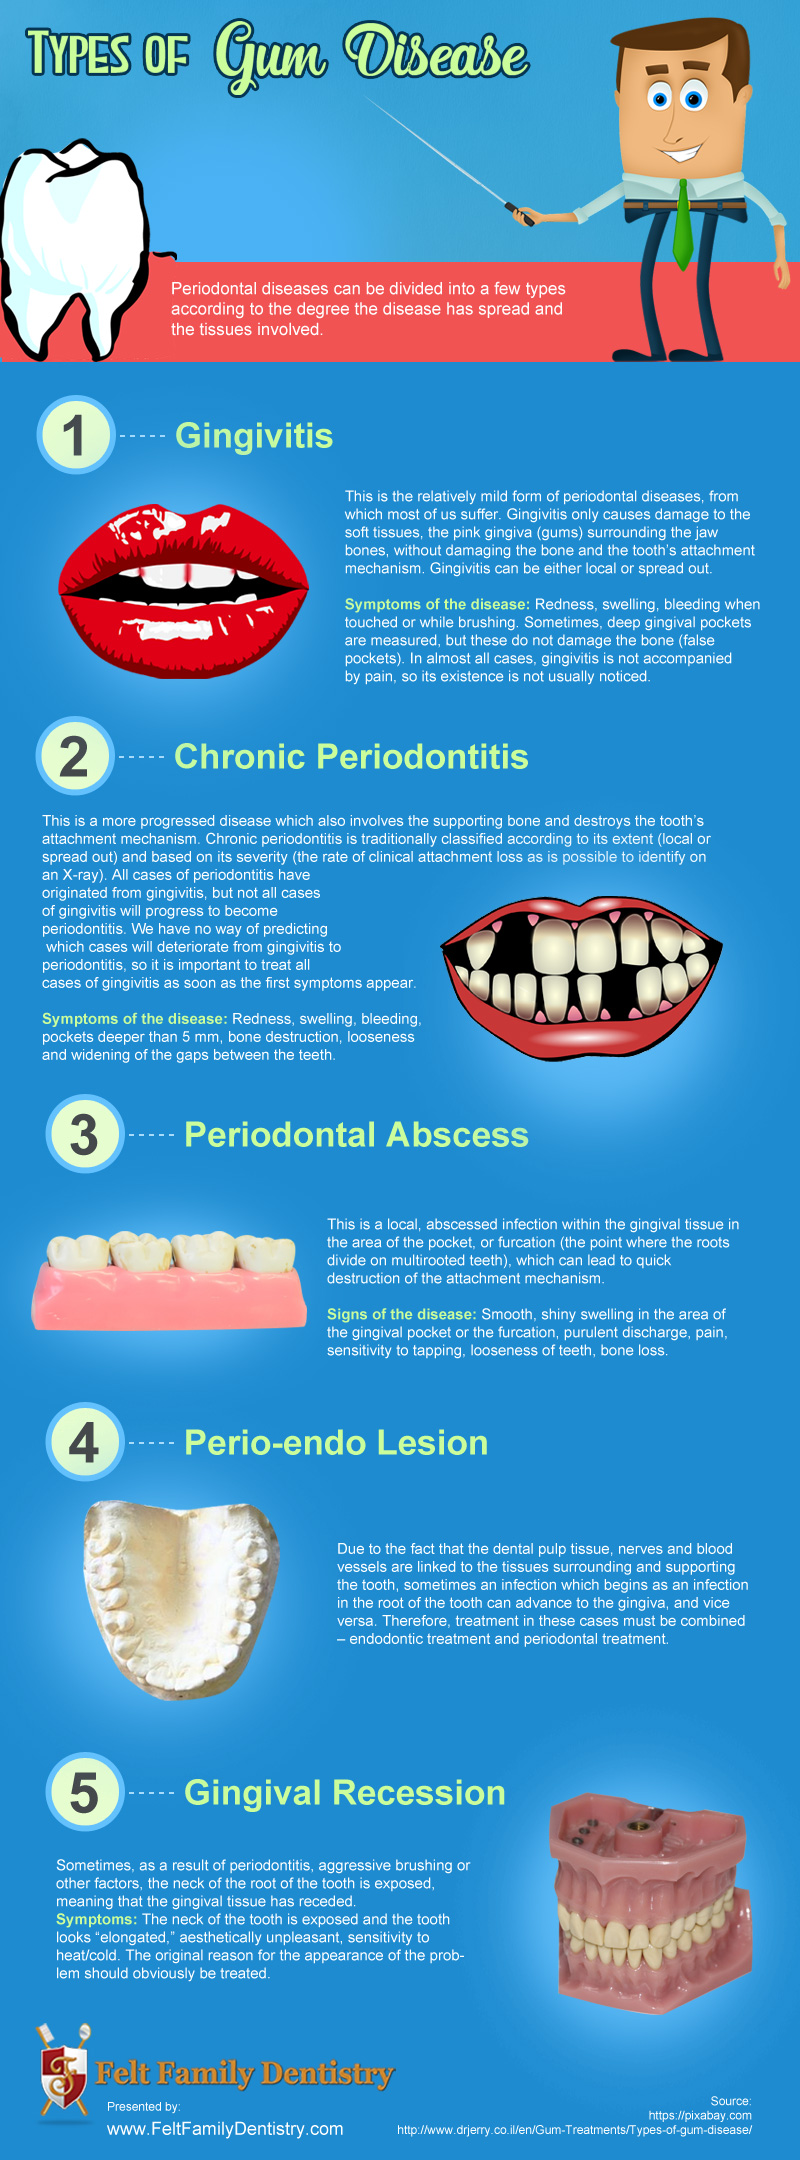 Types of Gum Disease [infographic]